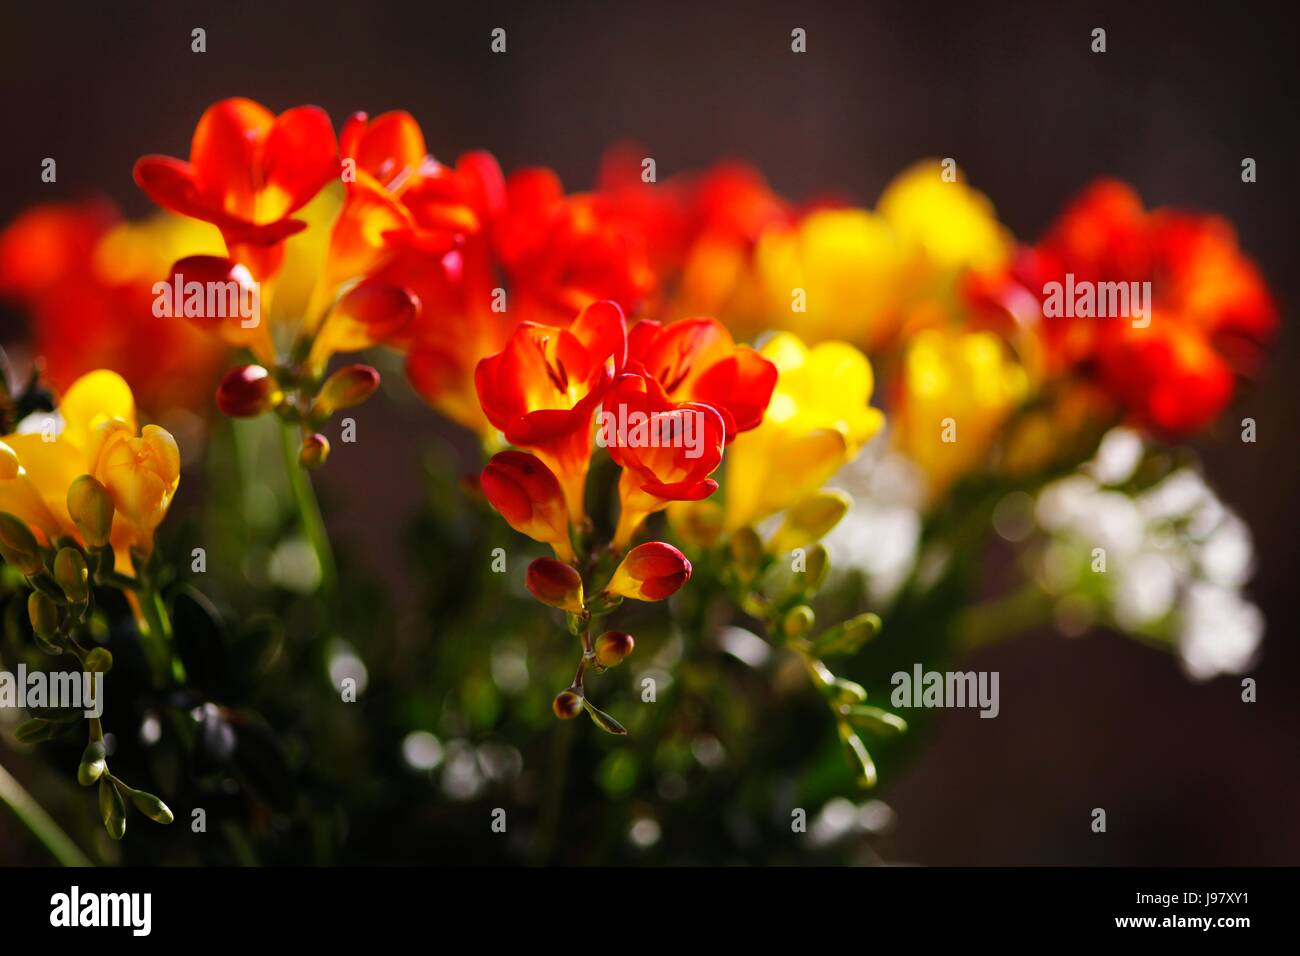 leaf, garden, flower, plant, bloom, blossom, flourish, flourishing, leaves, Stock Photo